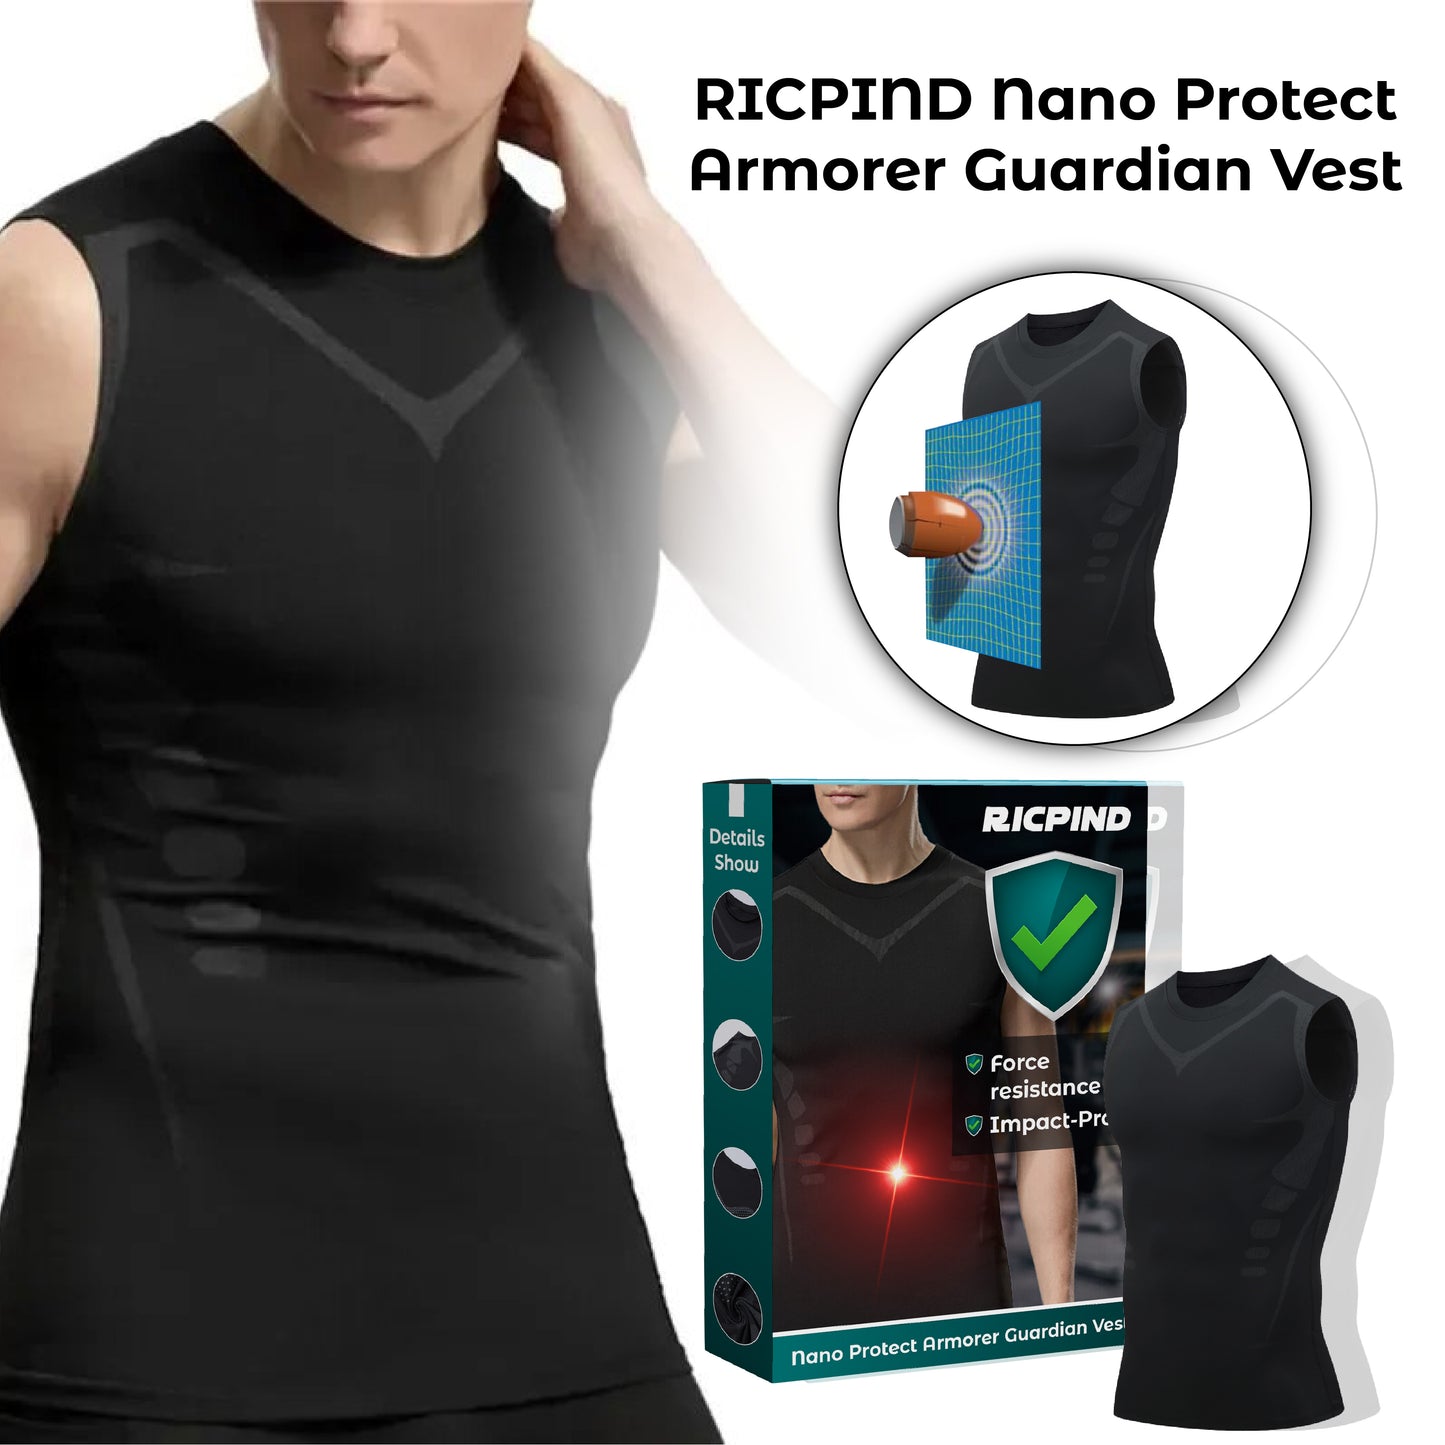 RICPIND 2 Nano Protect Armorer Guardian Vest